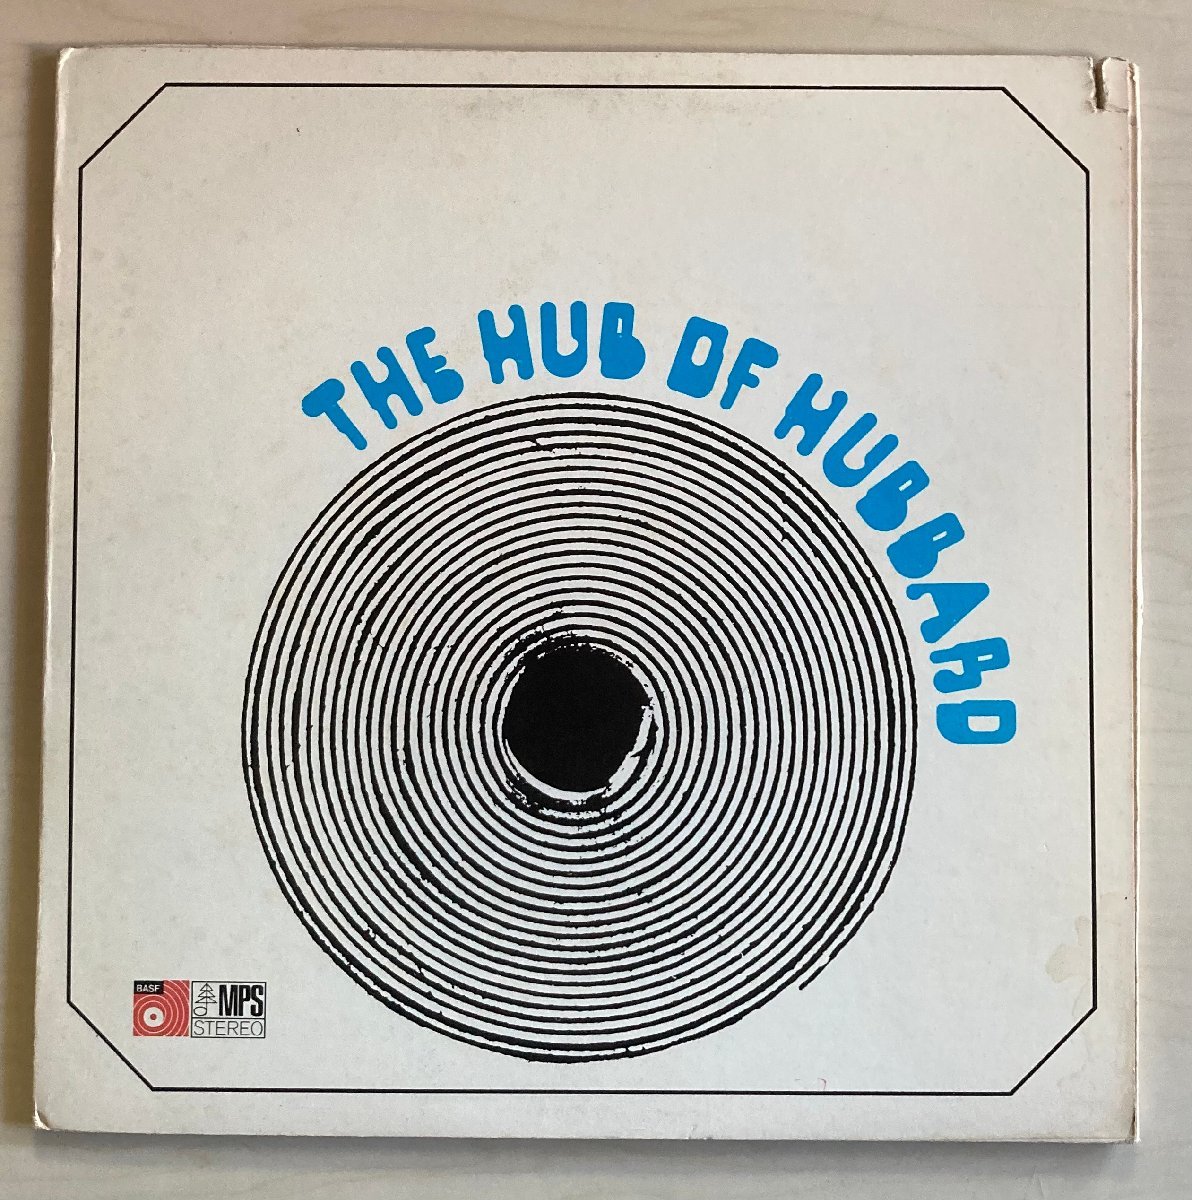 LPA22763 フレディ・ハバード FREDDIE HUBBARD / THE HUB OF HUBBARD 輸入盤LP 盤良好_画像1